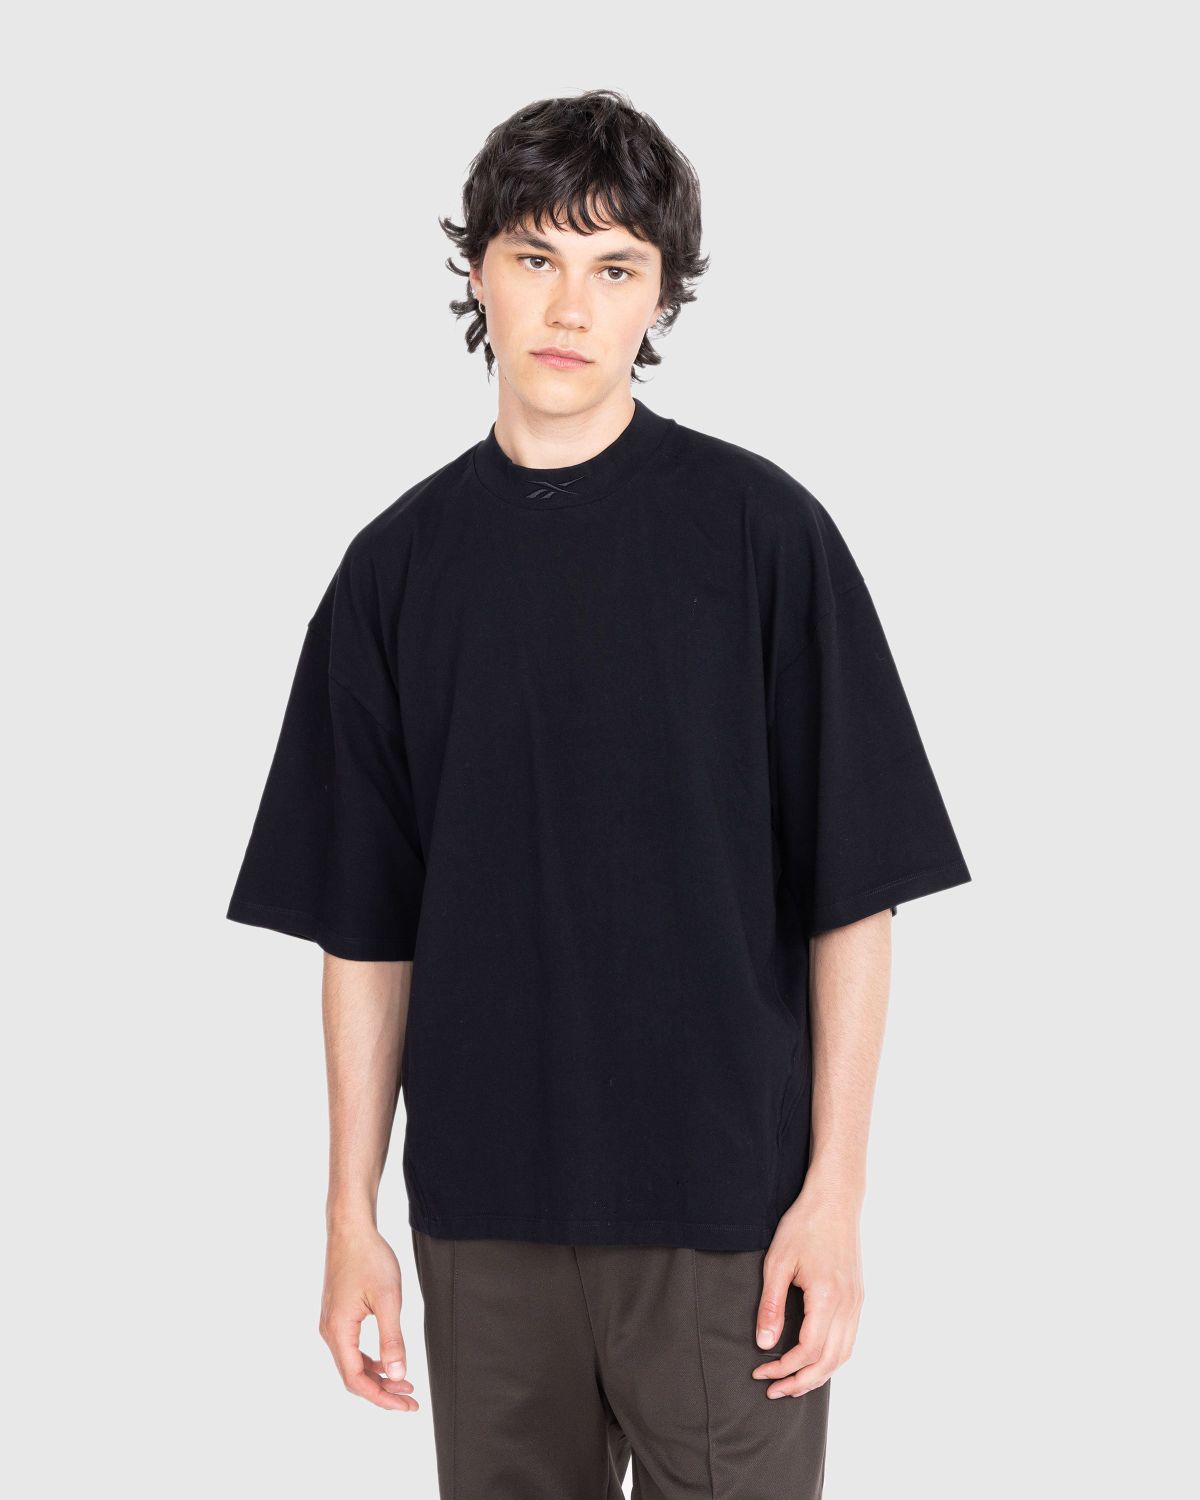 Reebok – Piped T-Shirt Black | Highsnobiety Shop